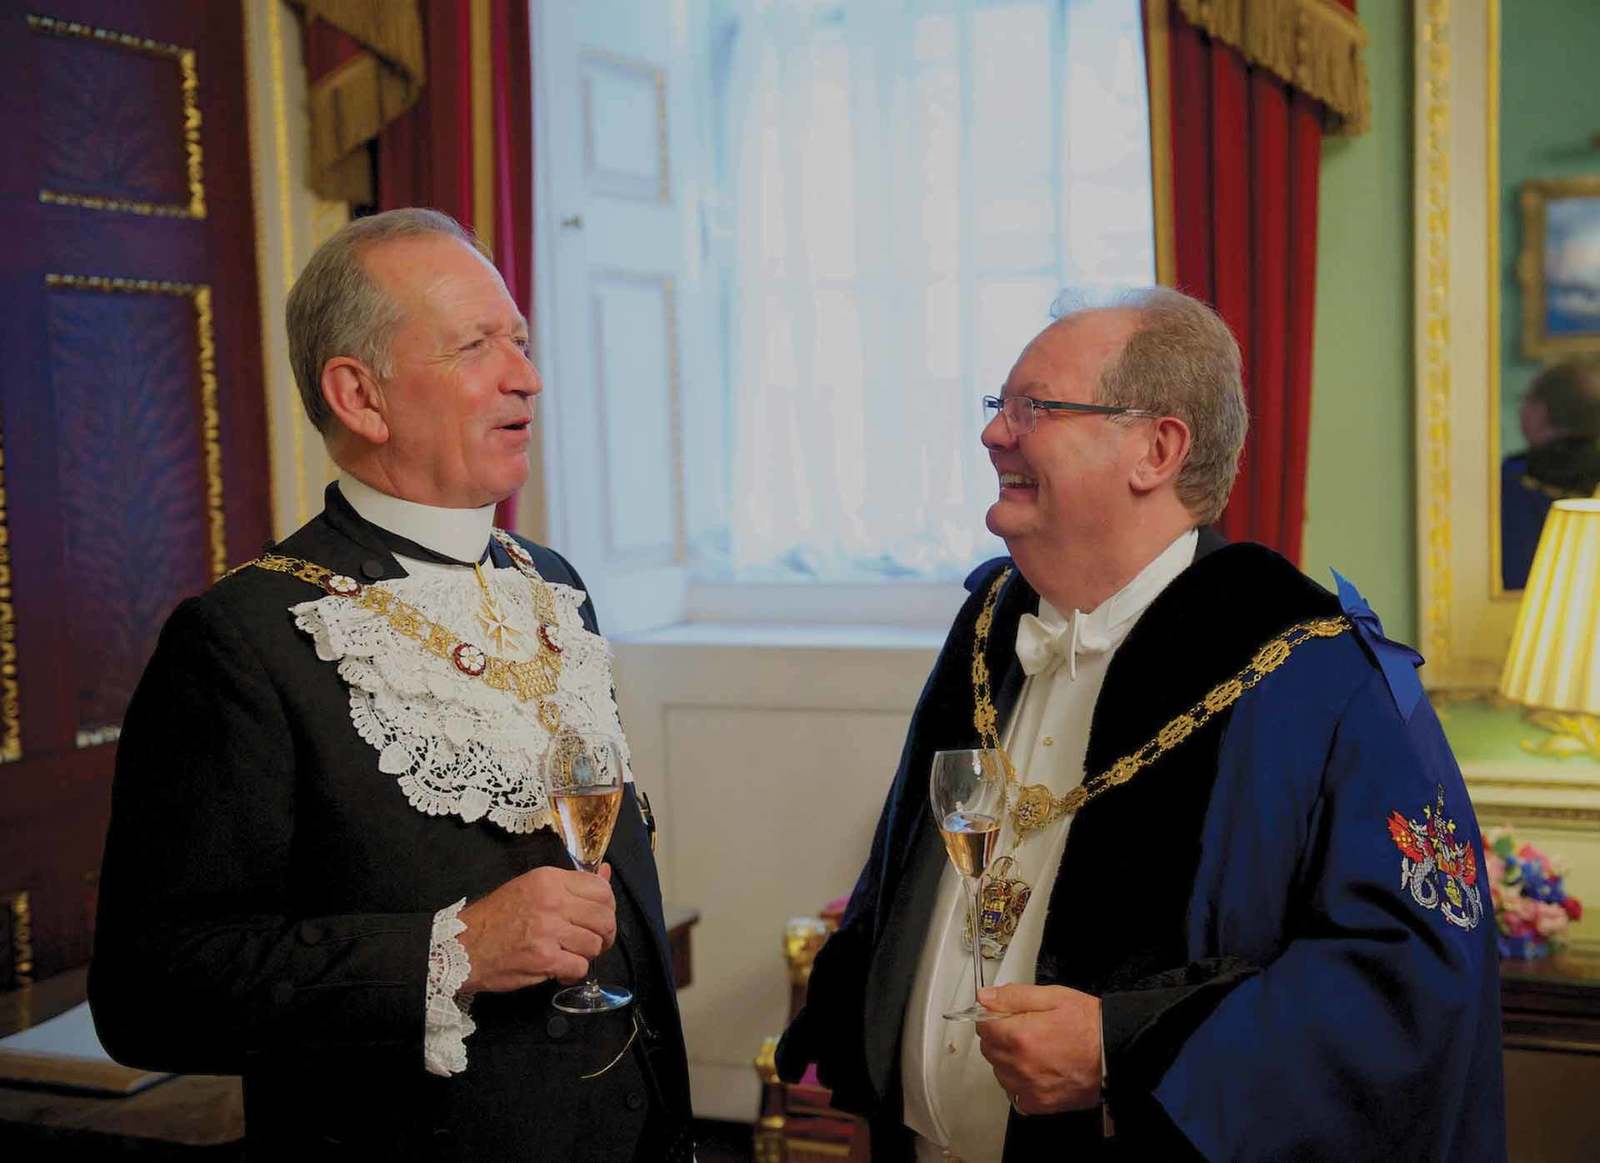 With Lord Mayor Alan Yarrow